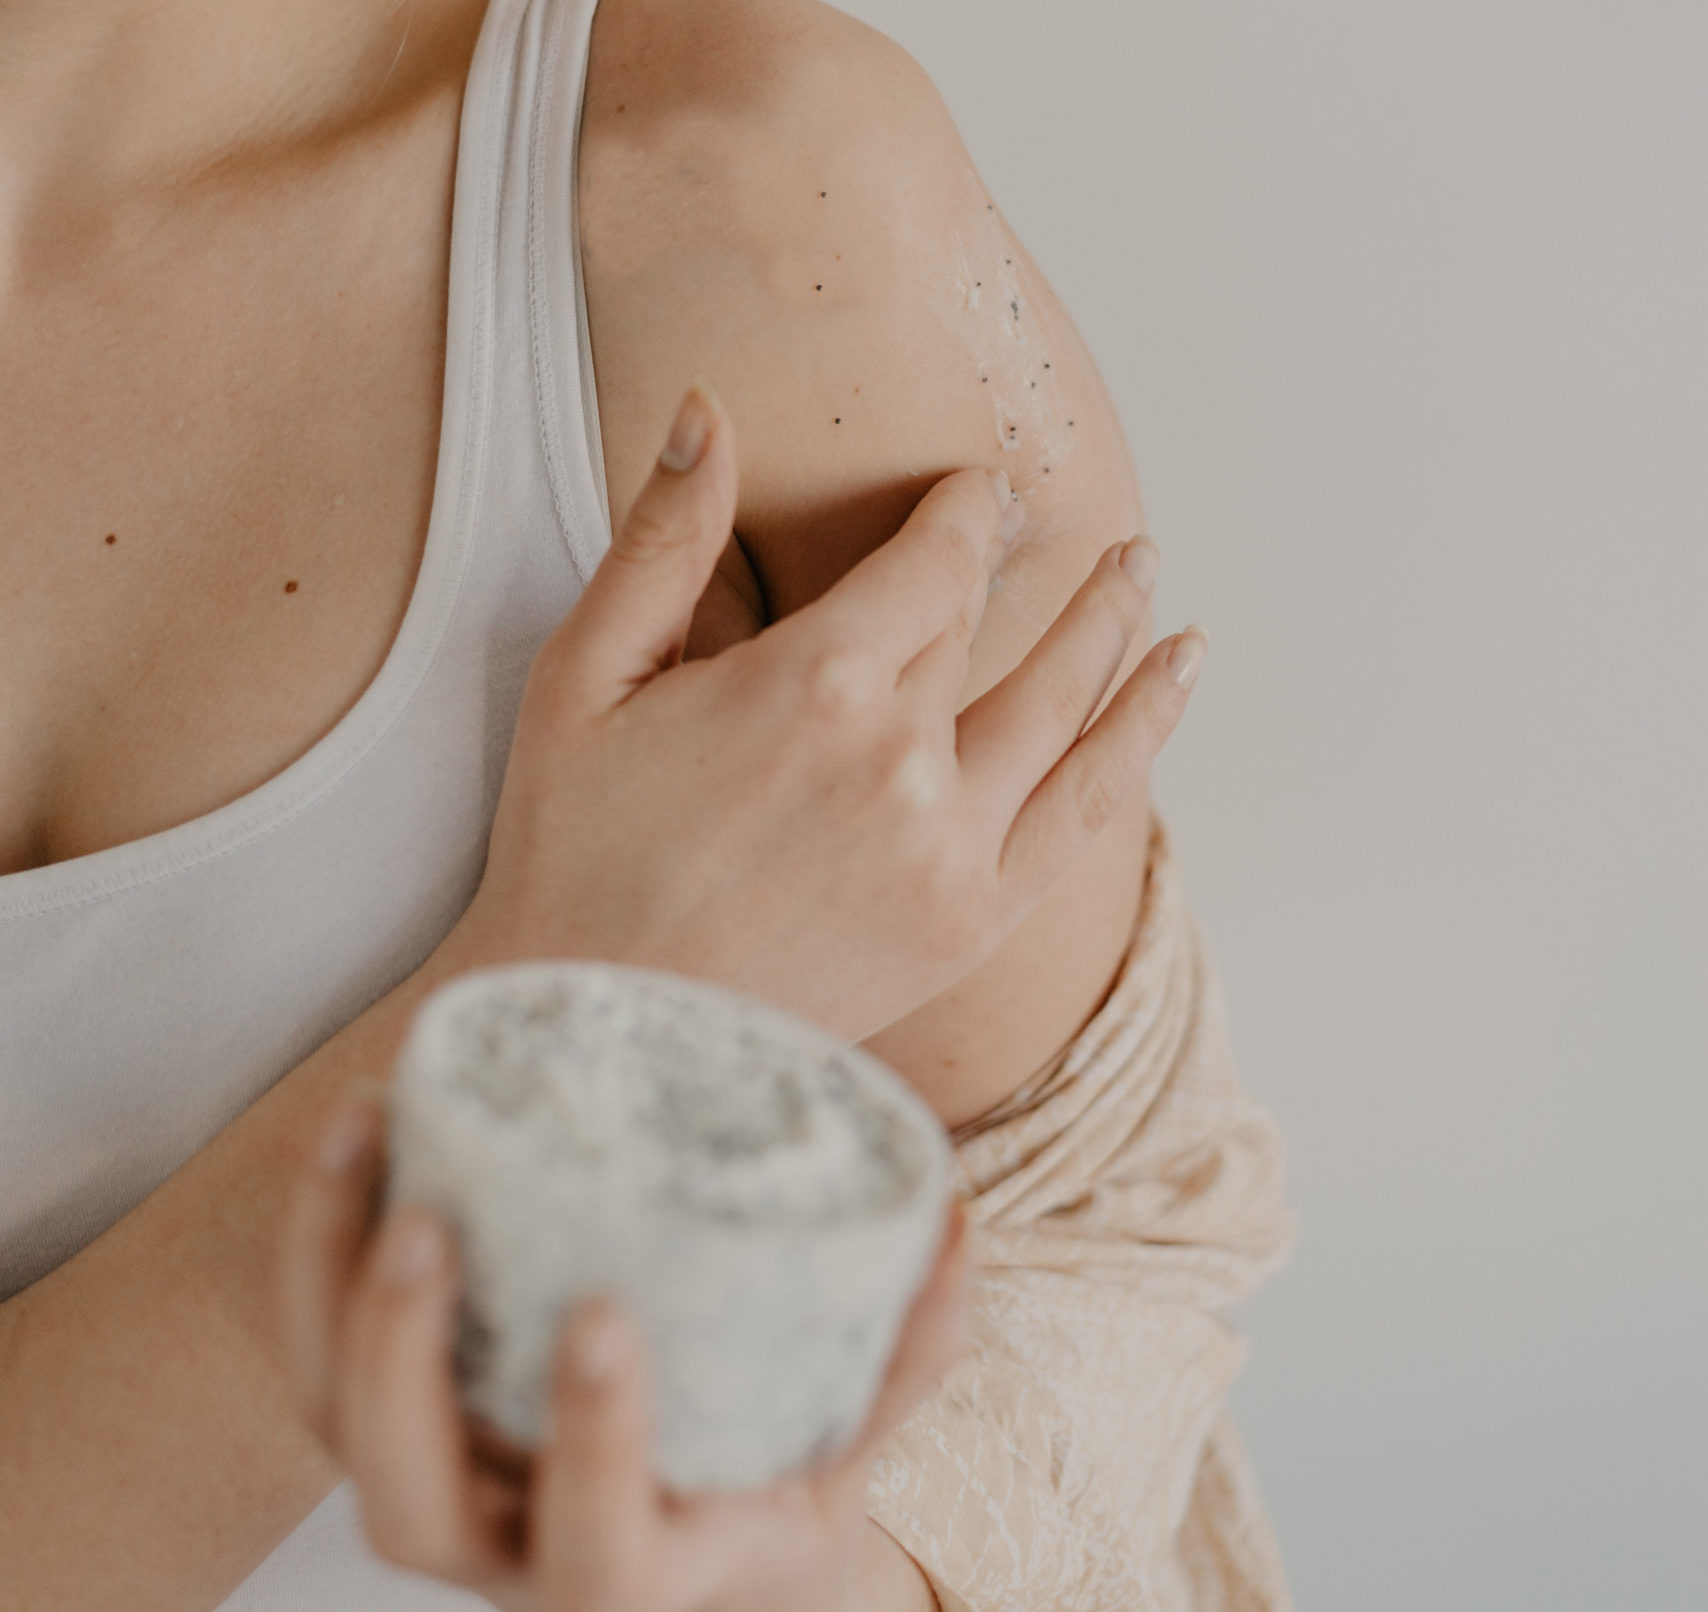 Woman applying skin exfoliant treatment on skin, part of detoxifying therapies.